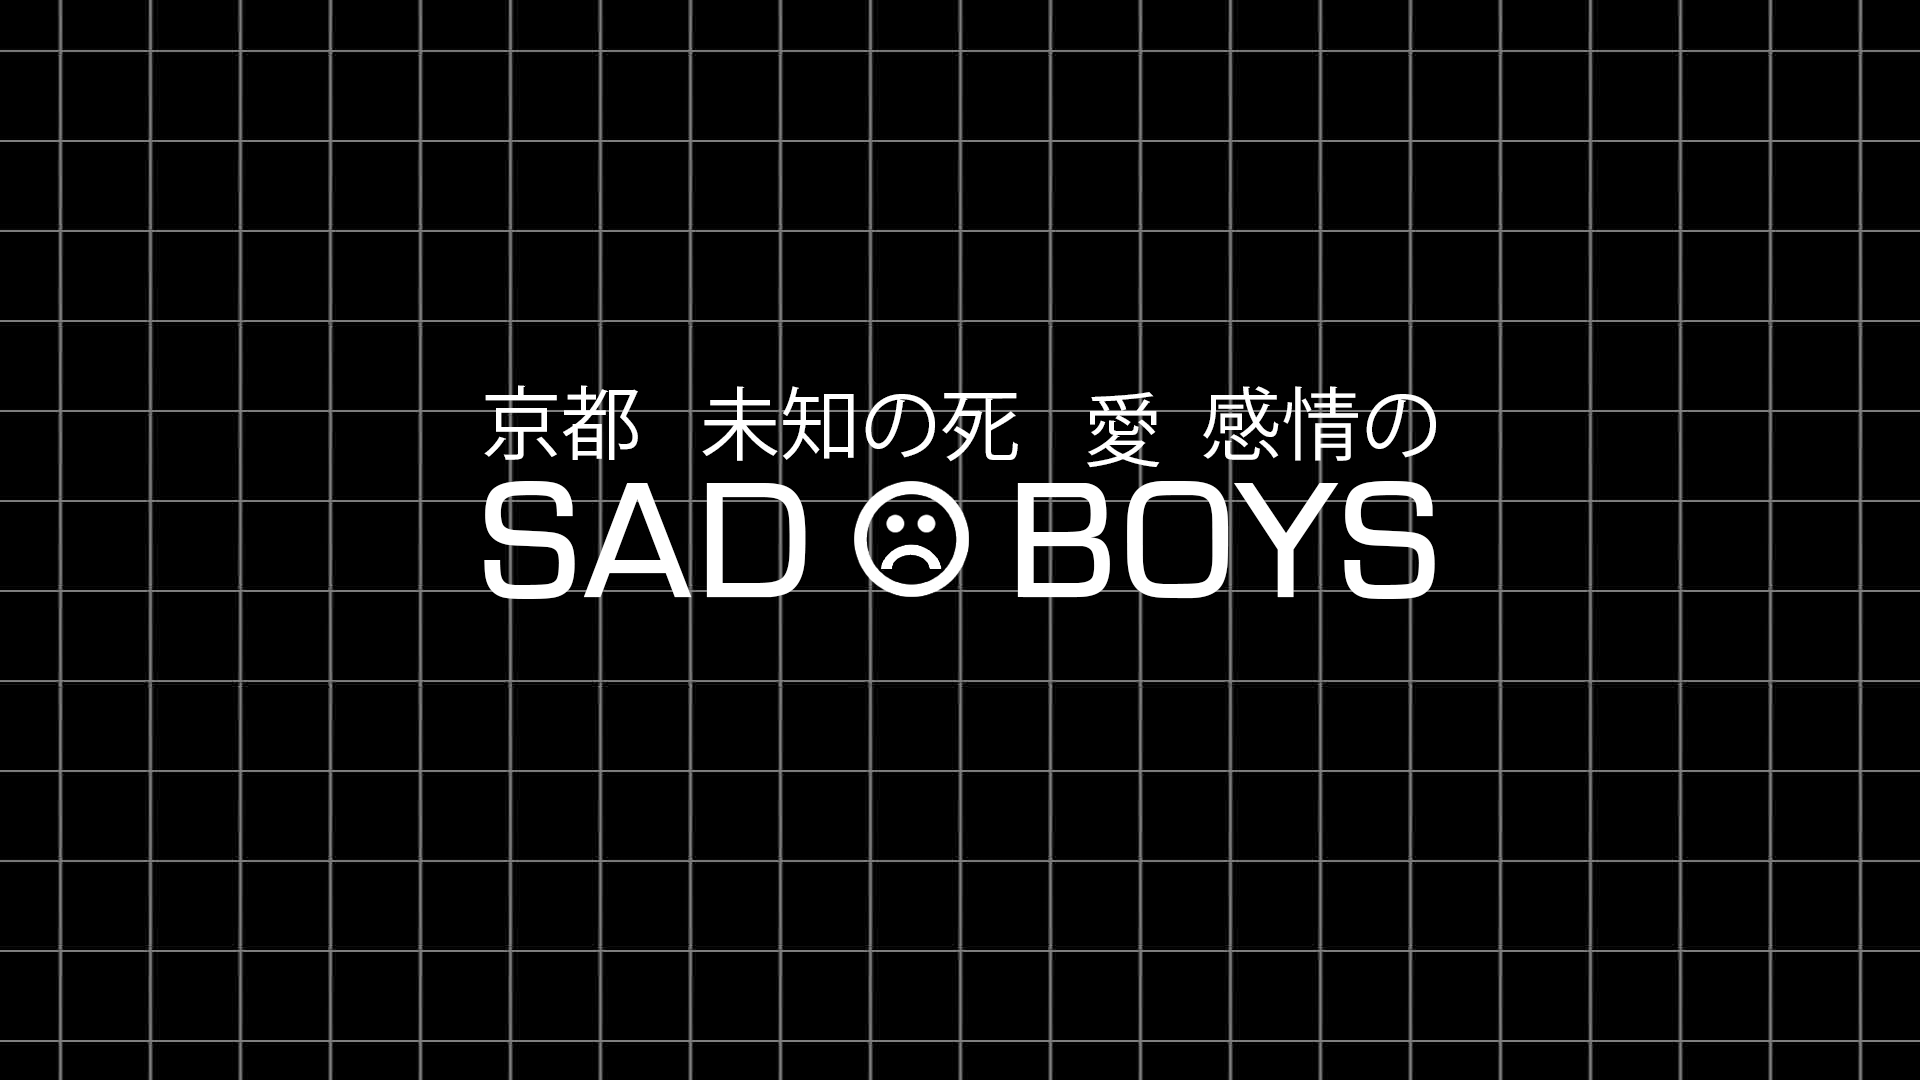 Free Download Sad Boy Wallpapers 